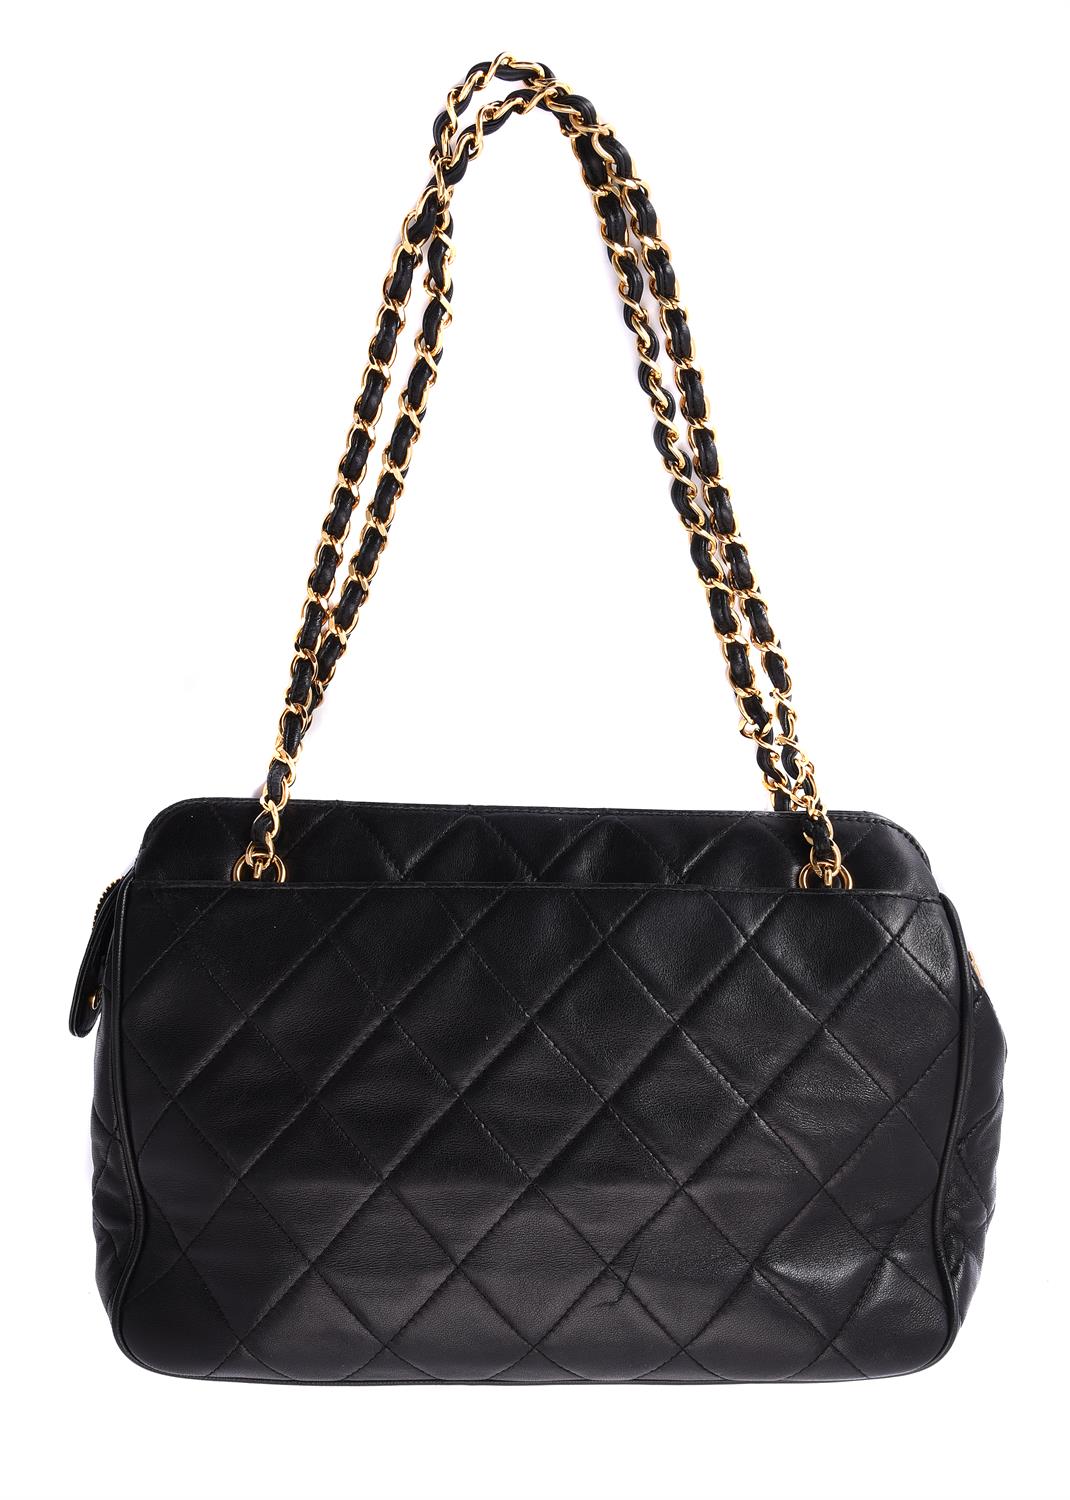 Chanel, a black quilted lambskin shoulder bag - Image 2 of 3